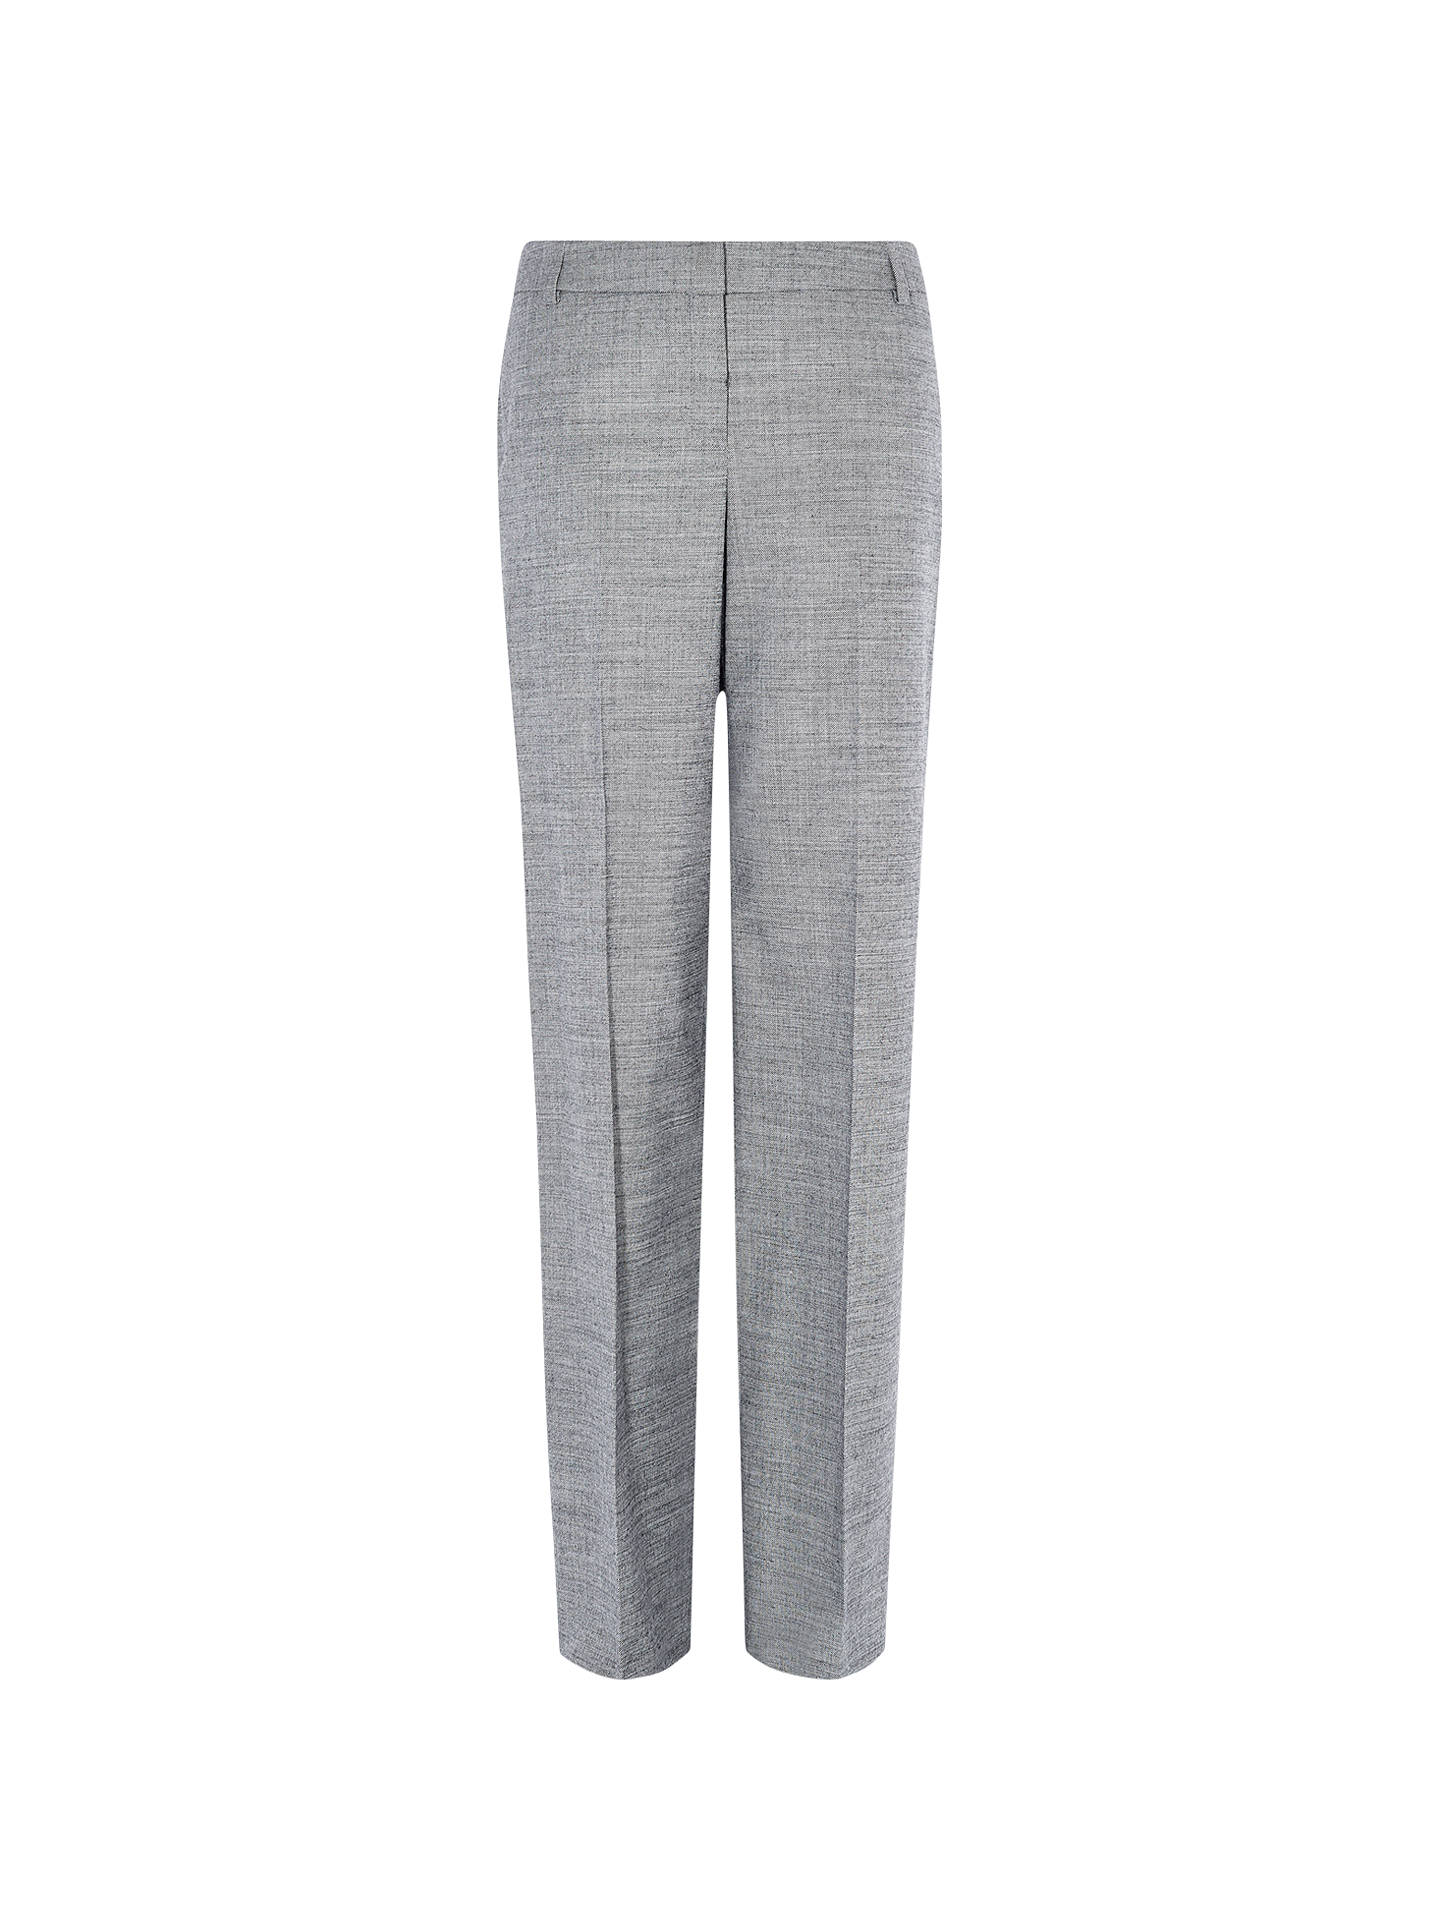 Karen Millen Tailored Folded Trousers, Grey at John Lewis & Partners